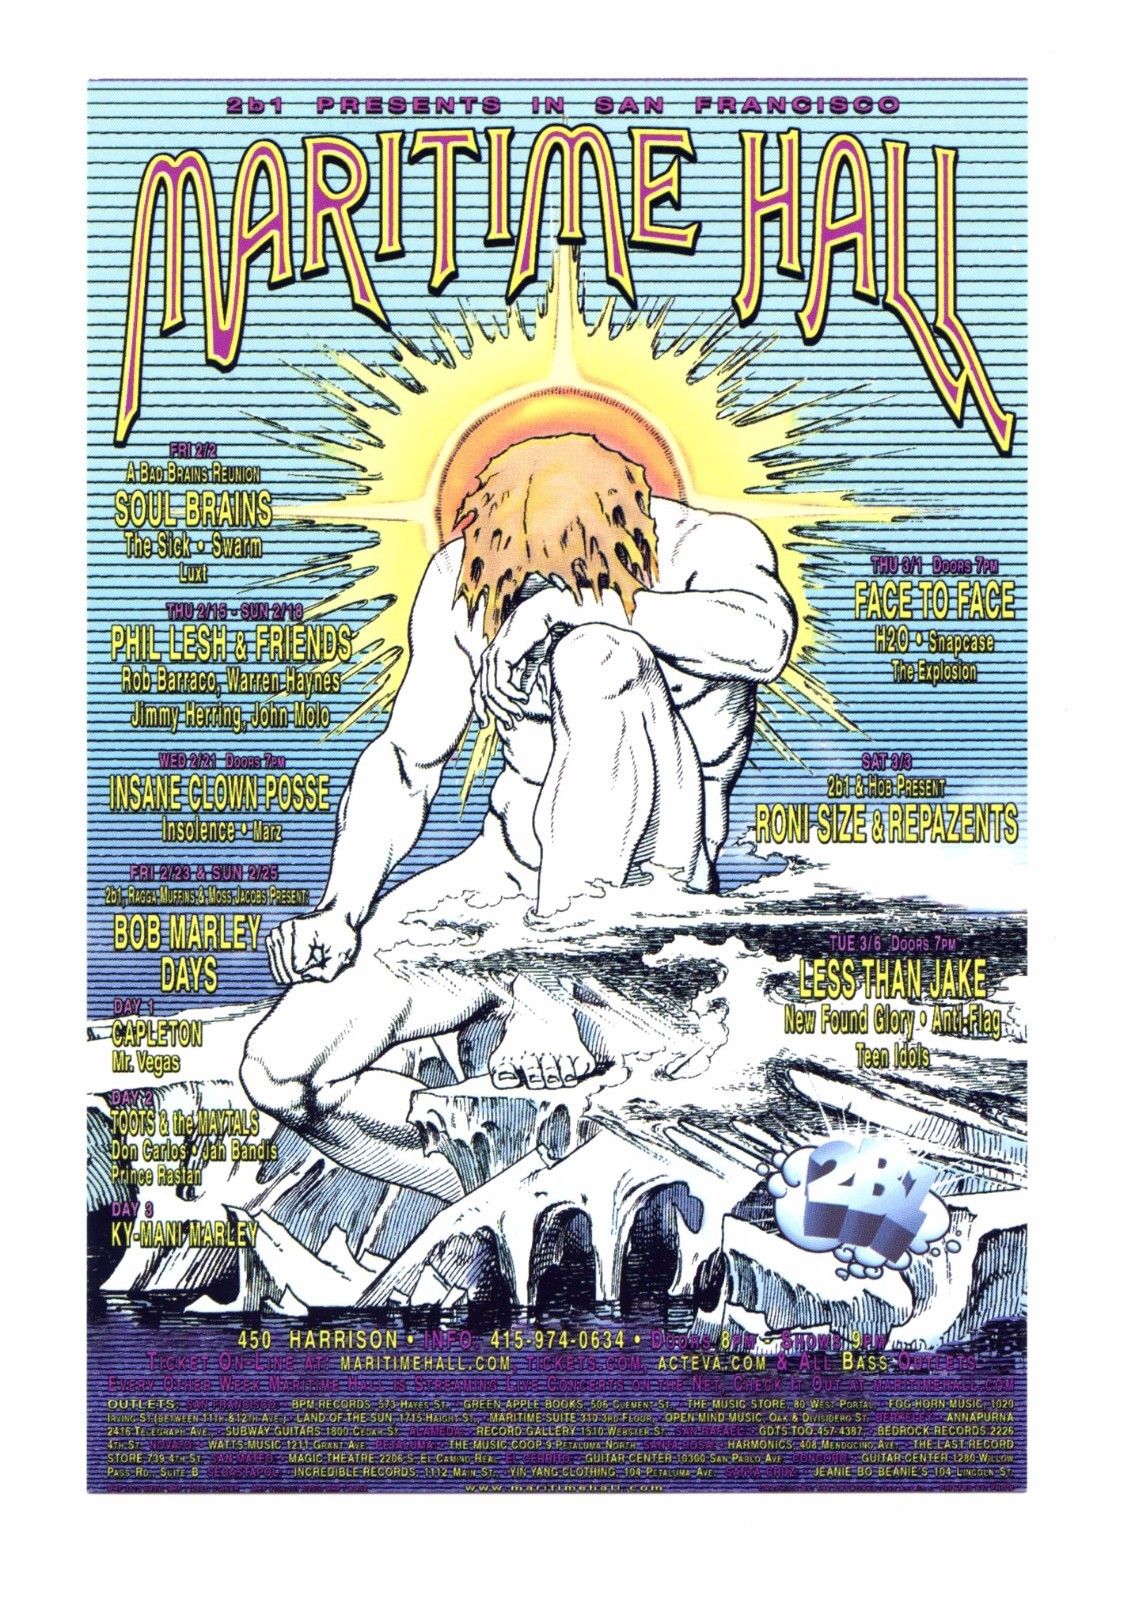 Maritime Hall 2001 Feb Handbill Phil Lesh Toots & The Maytals Soul Brains